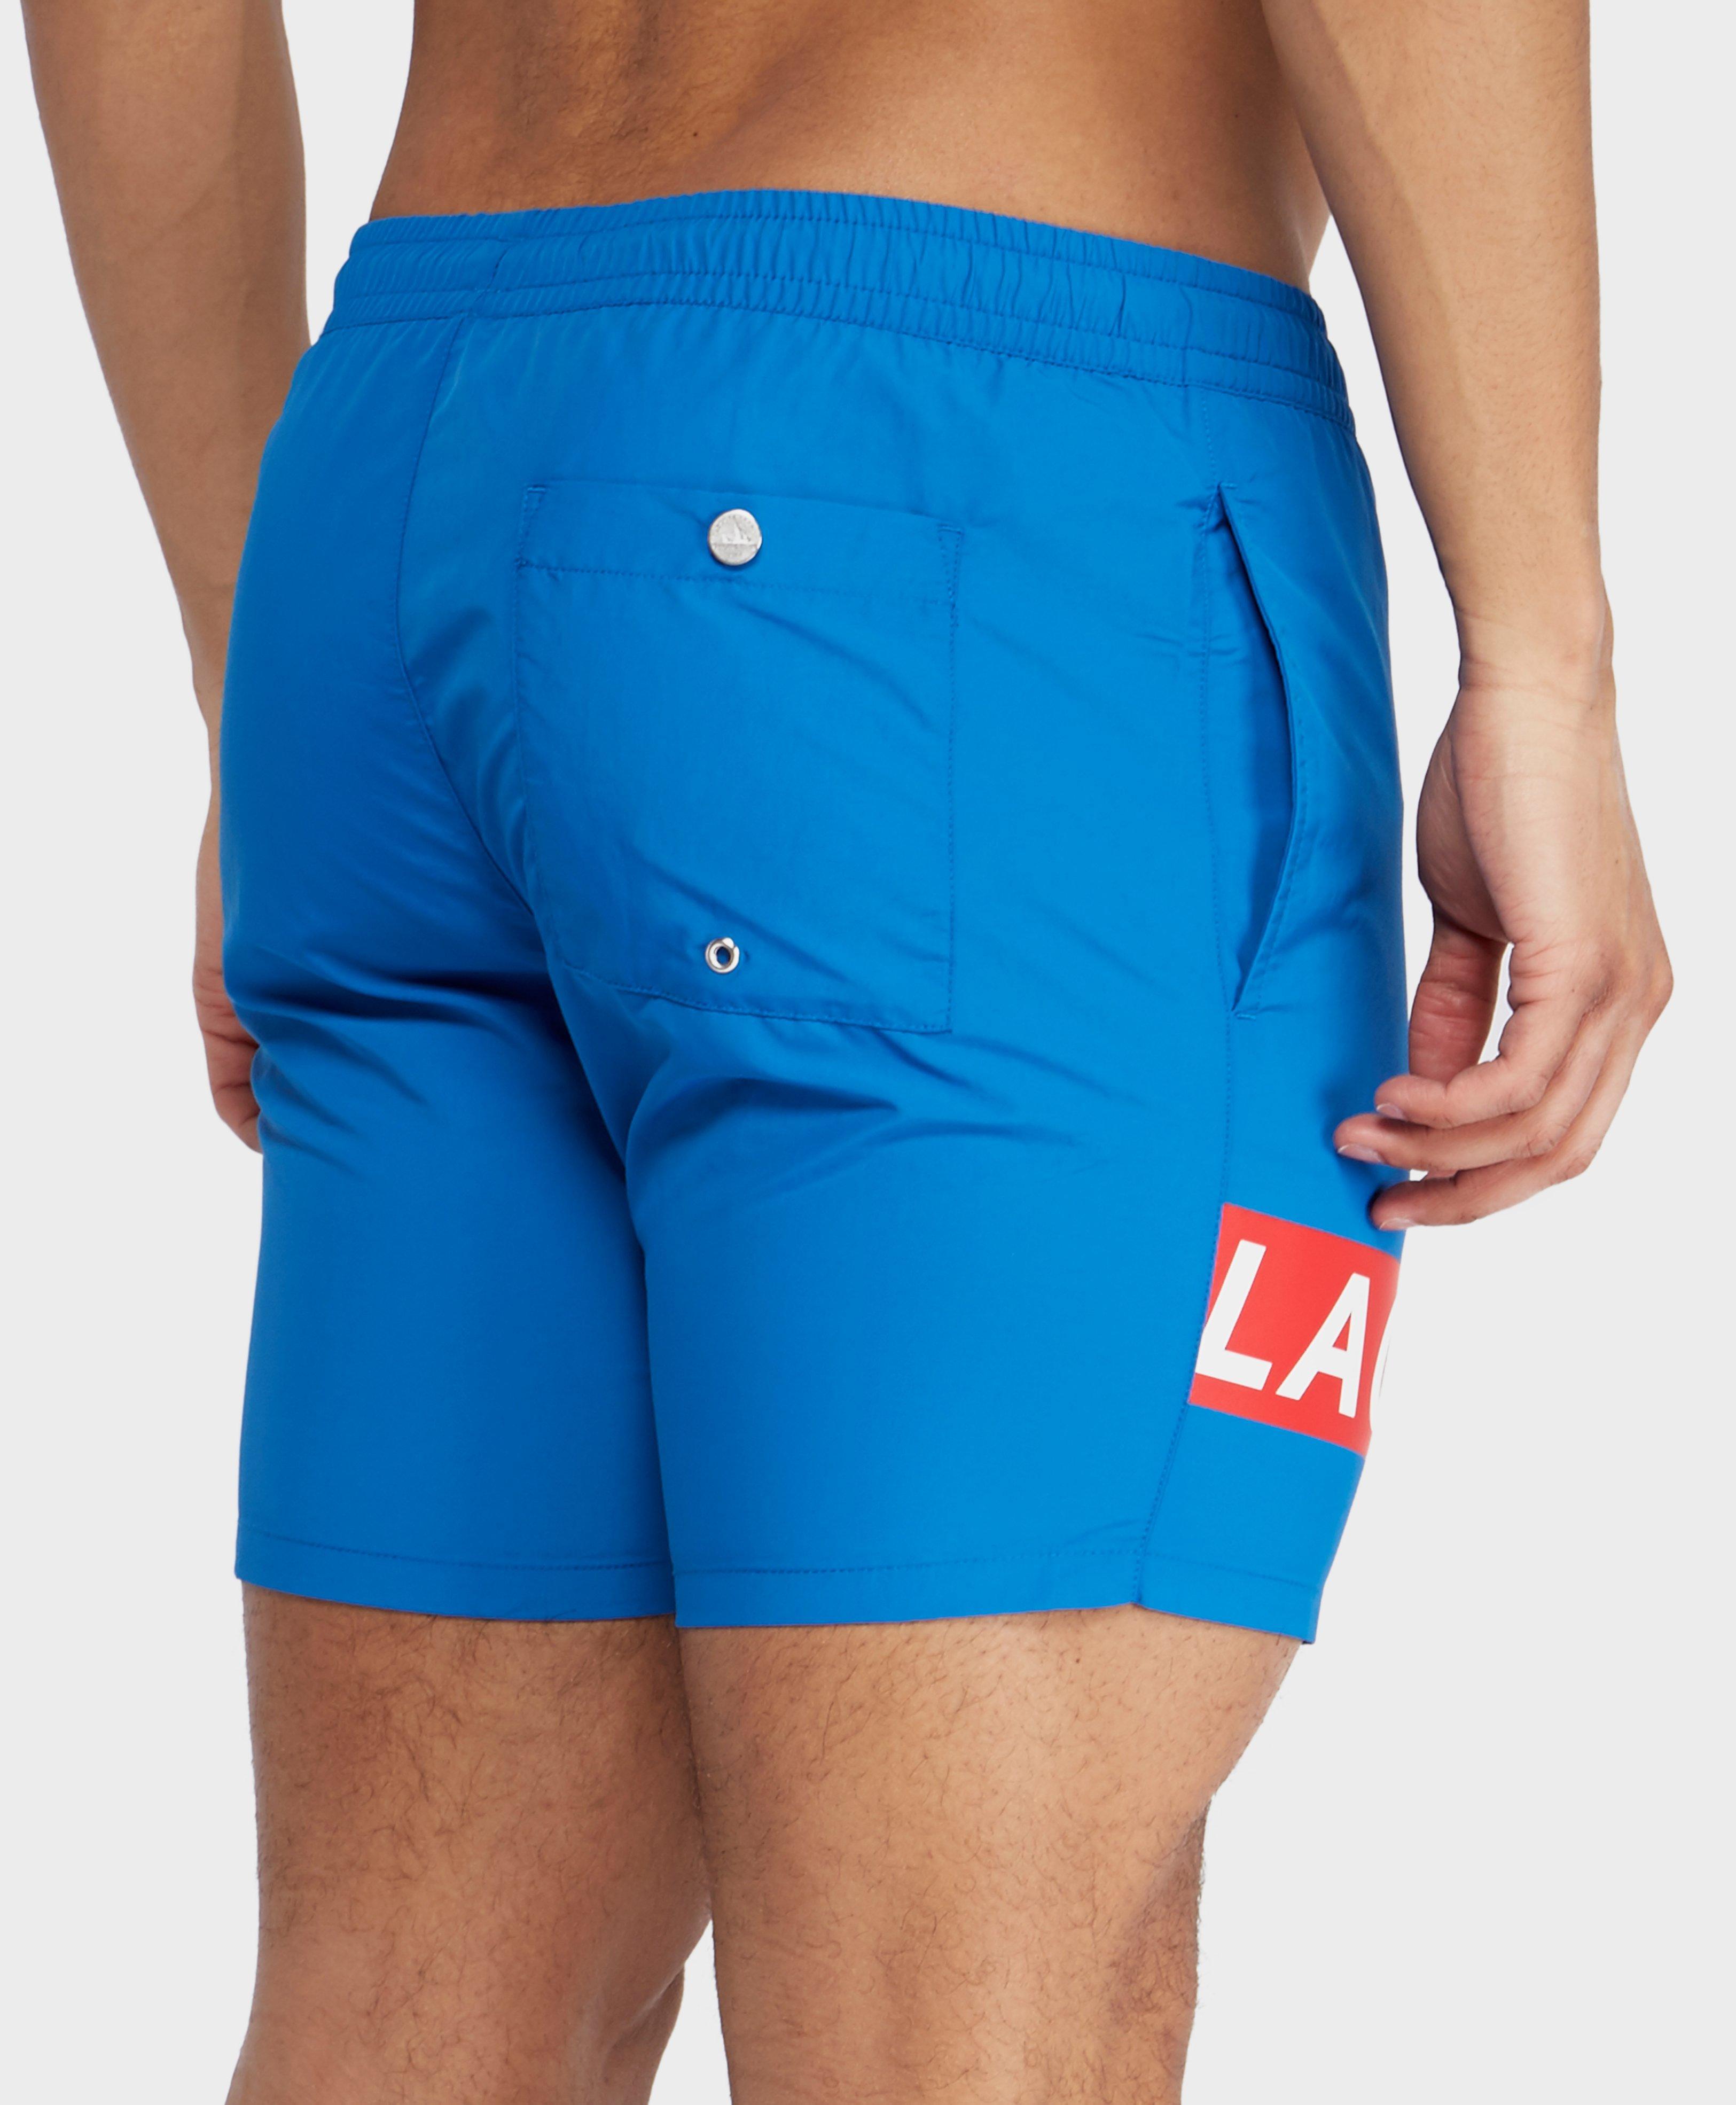 Lyst - Lacoste Branded Swim Shorts in Blue for Men